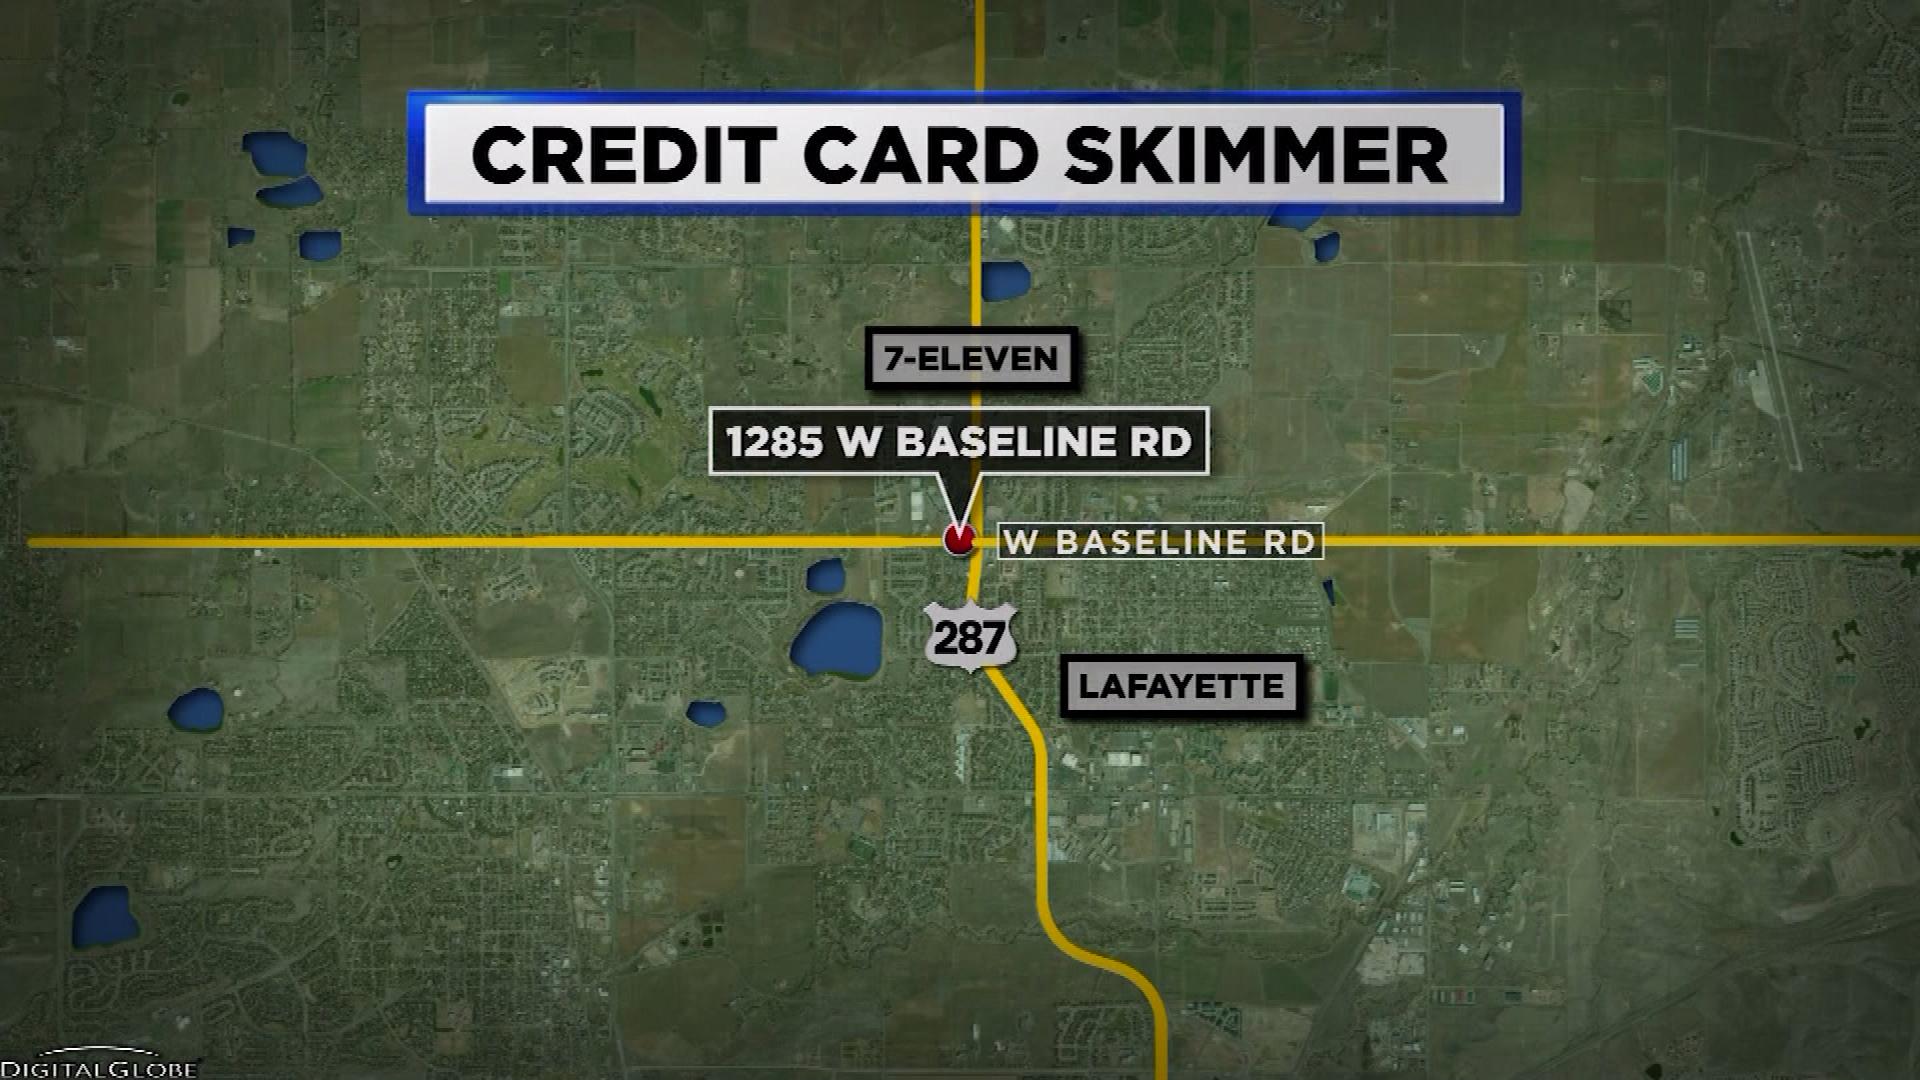 LAFAYETTE CARD SKIMMER MAP.transfer